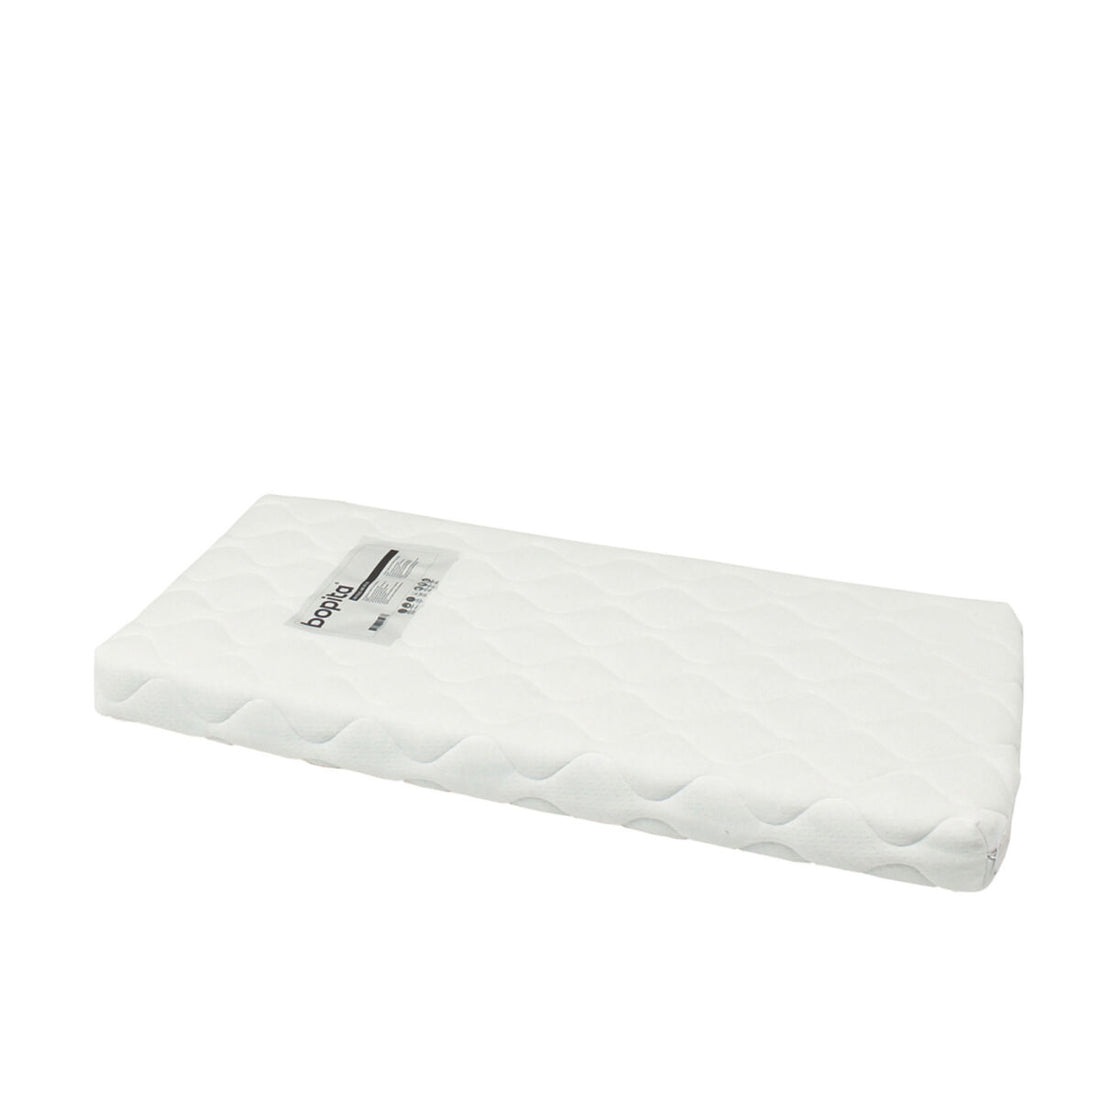 bopita-mattress-hr40-with-removable-cover-60x120cm-bopt-254000- (1)